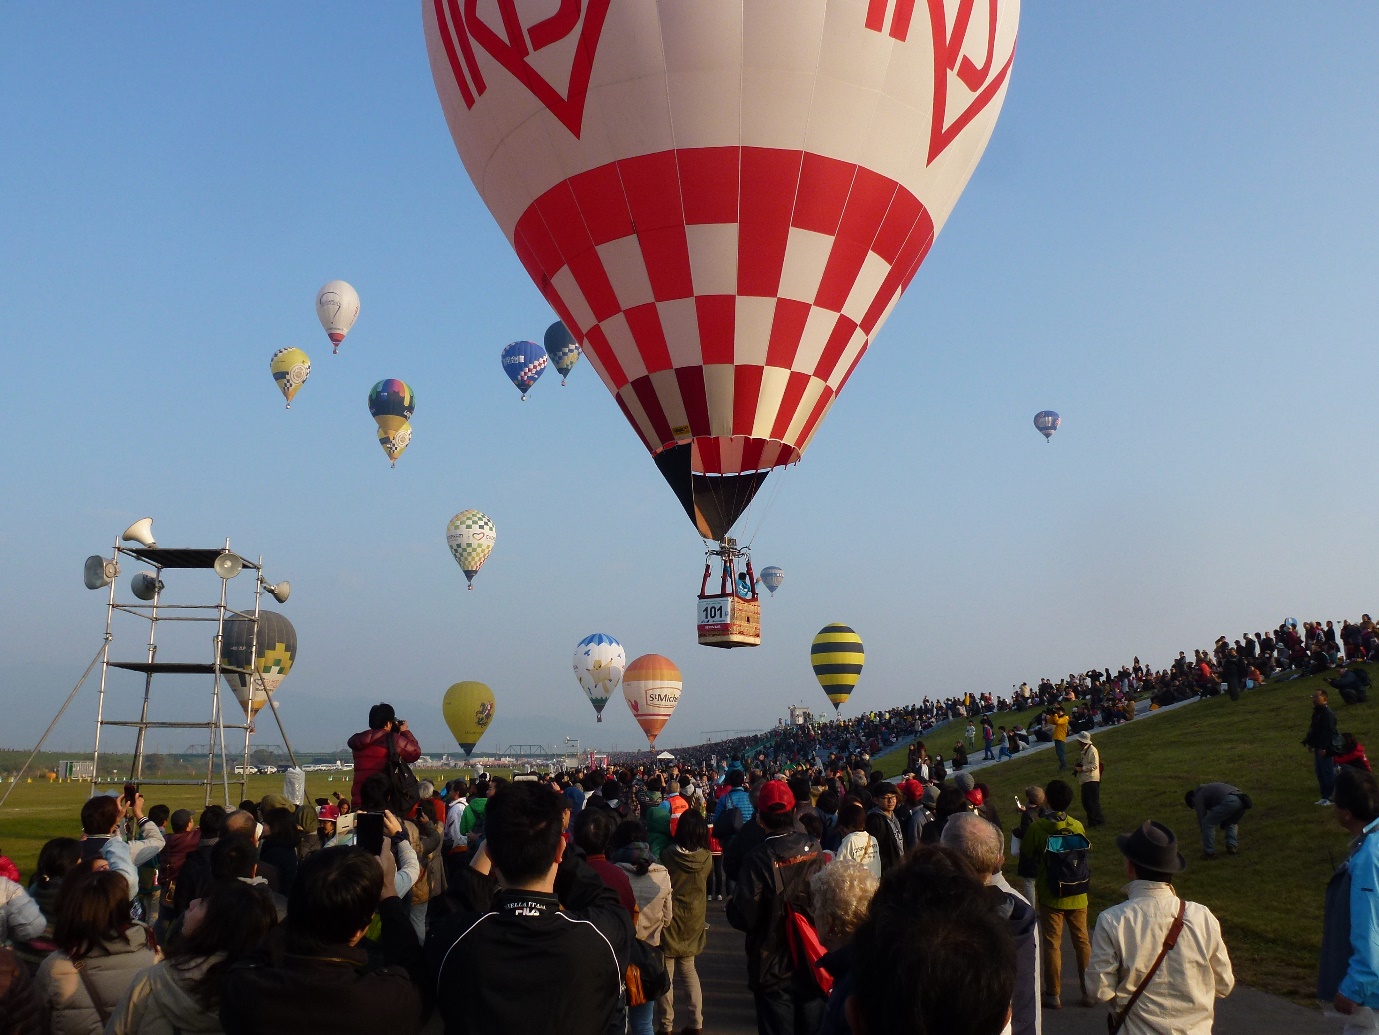 Current top 10 at the 22nd FAI World Hot Air Balloon Championship